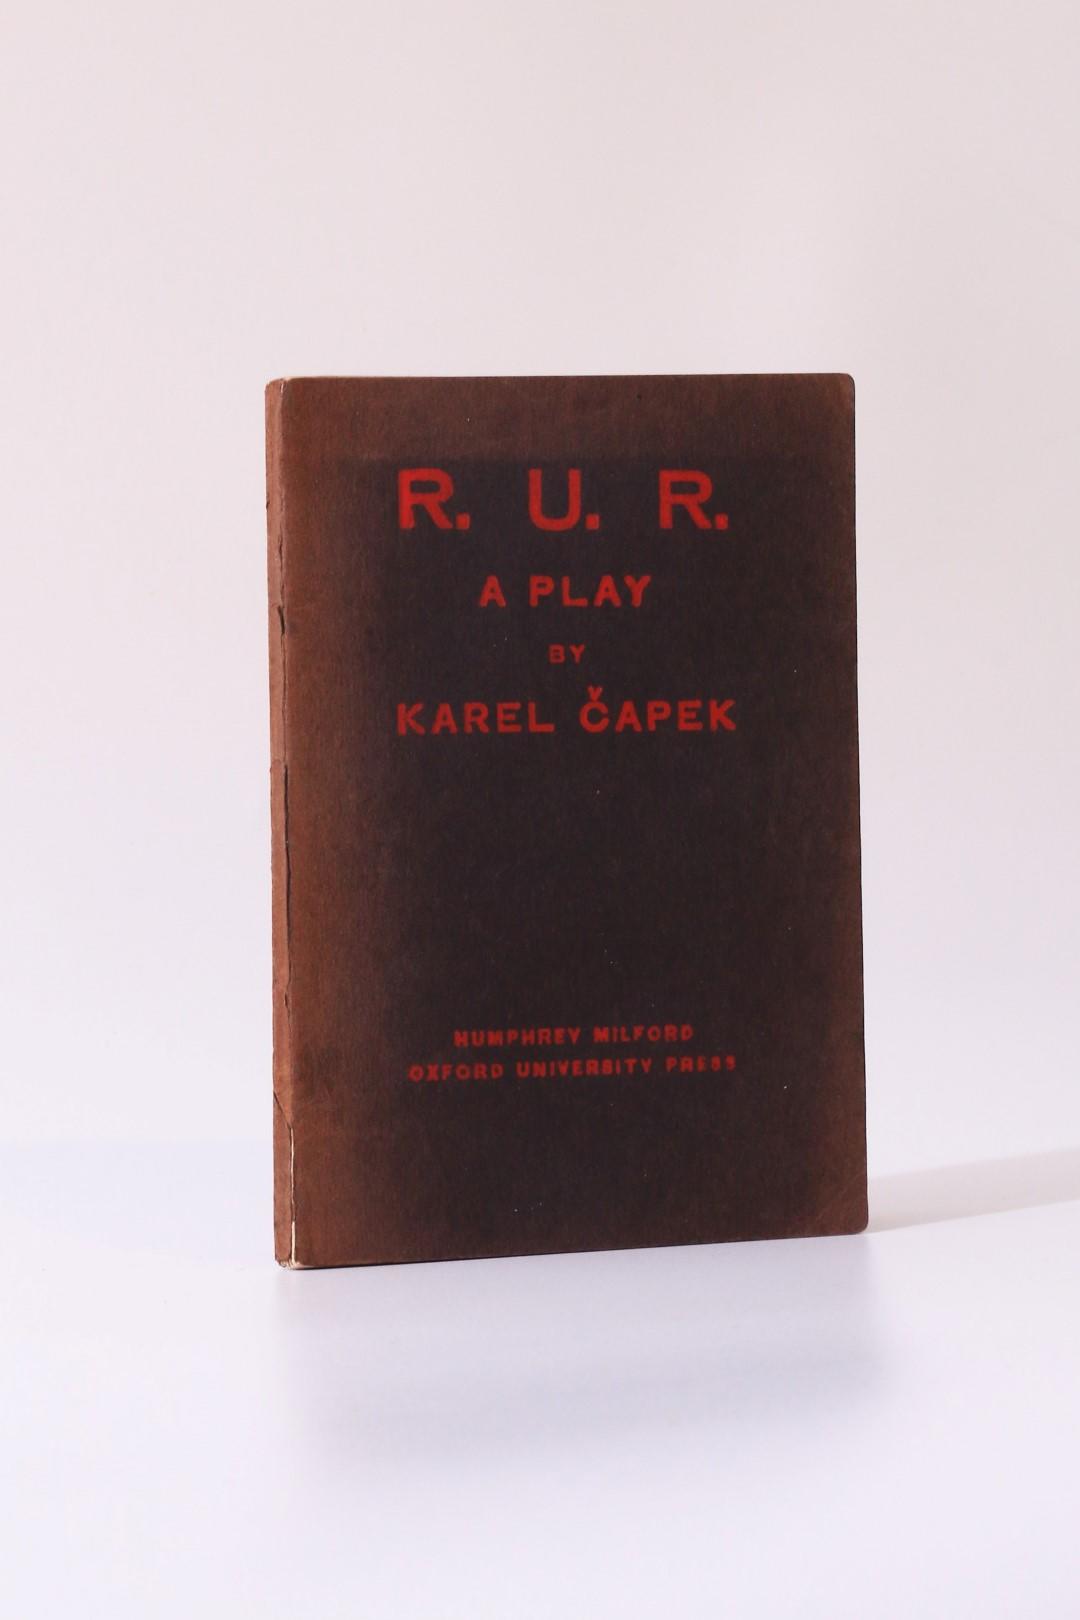 Karel Capek - R.U.R. [Rossum's Universal Robots] A Play - Humphrey Milford / Oxford University Press, 1923, First Edition.